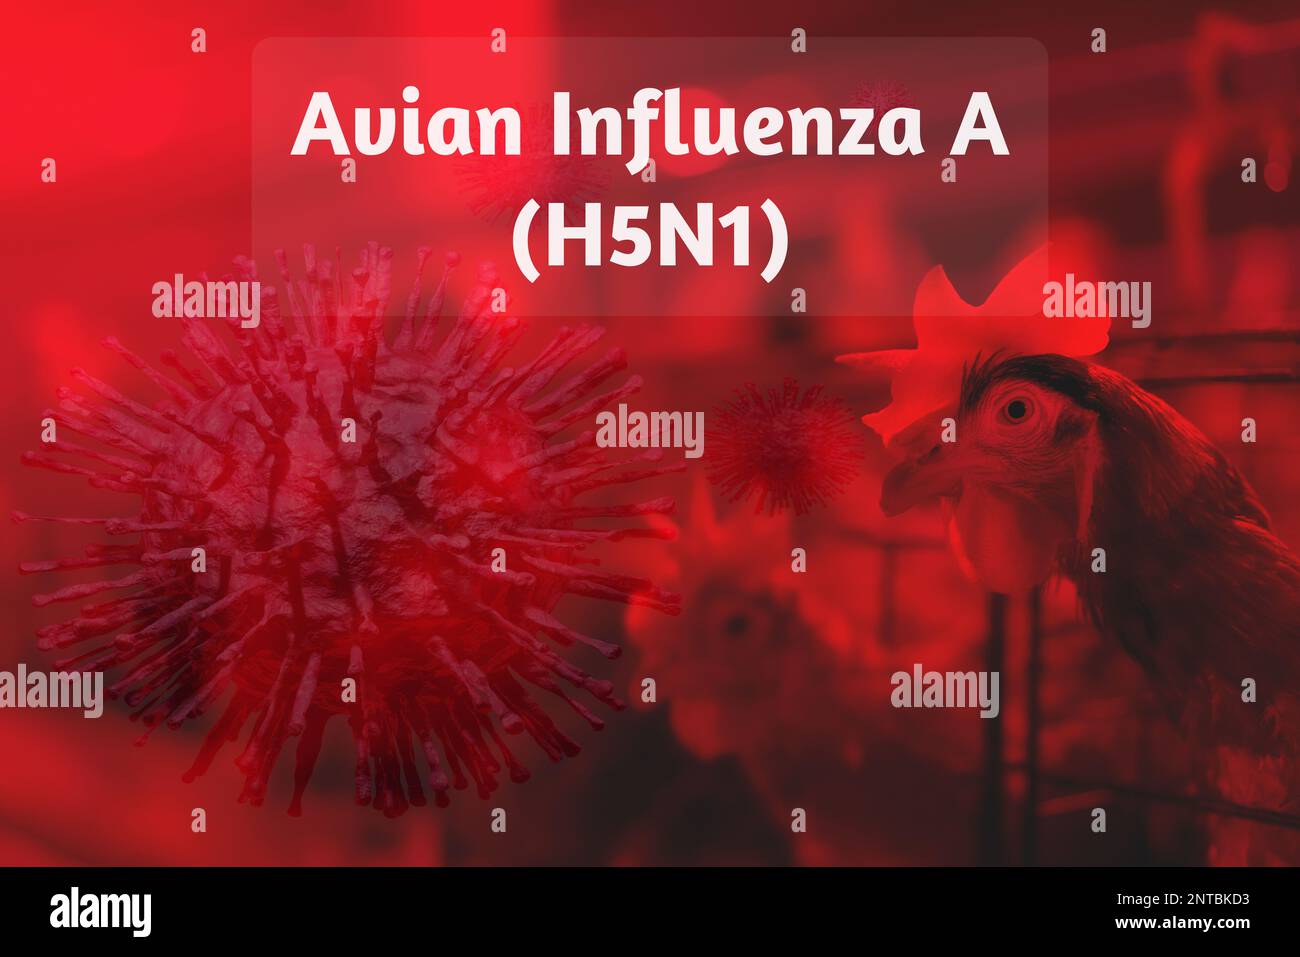 Avian Influenza A (H5N1) outbreak concept on chicken farm background. Avian influenza A virus subtype H5N1. Human infection with avian influenza A Stock Photo